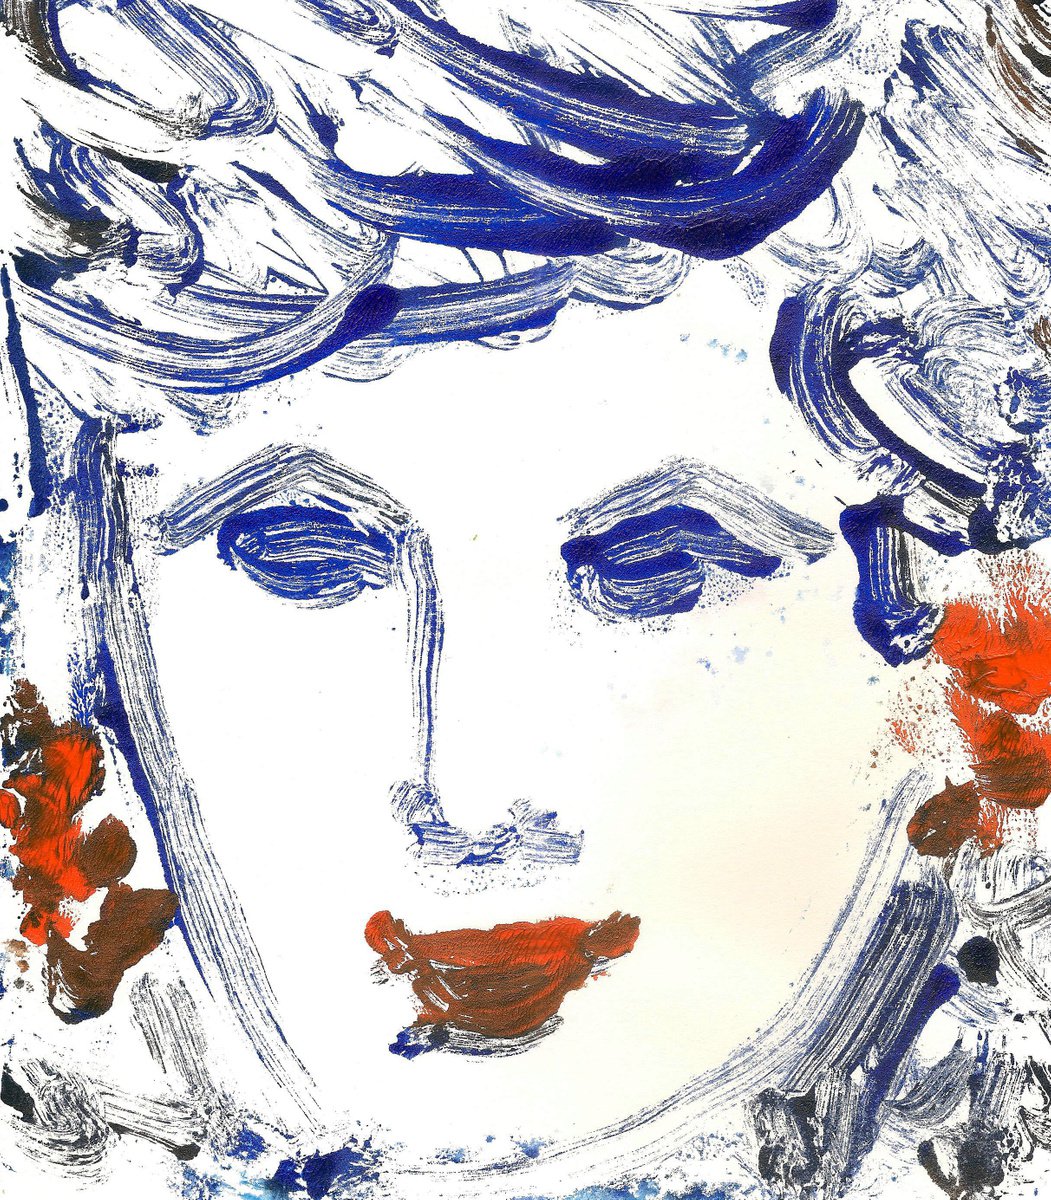 Portrait of a woman - Classic Blue Woman II  - Monotype Print by Asha Shenoy